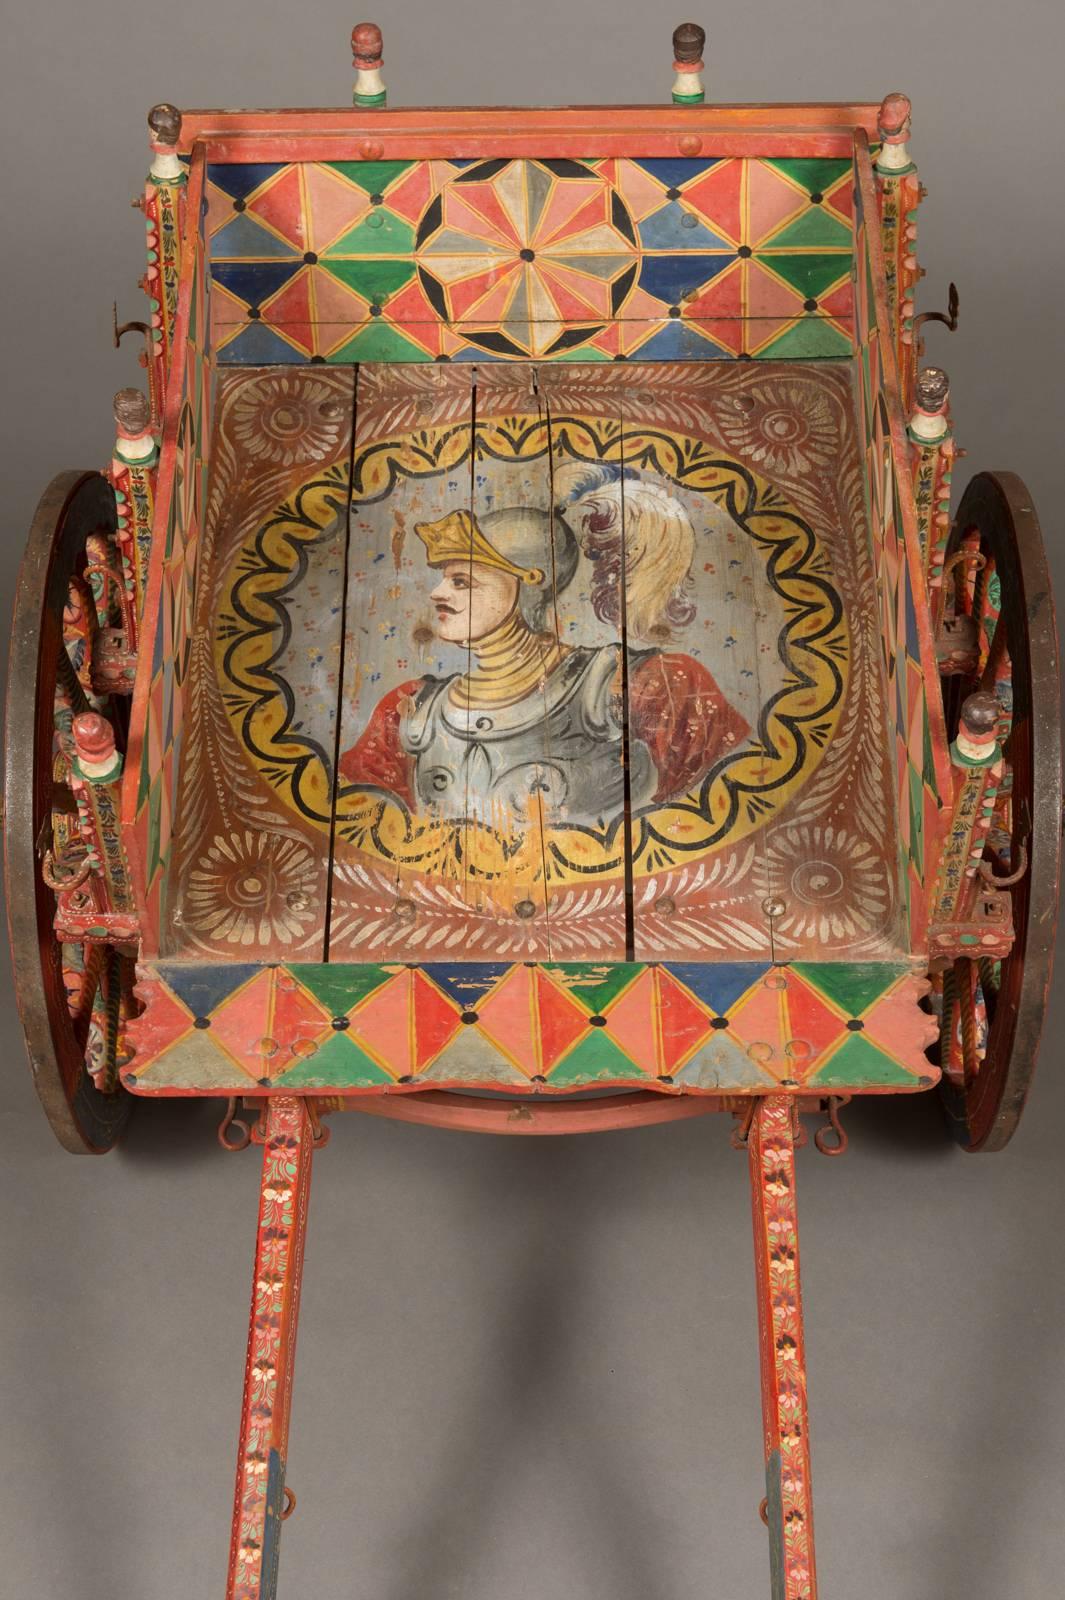 Iron Ornate and Colorful Italian Processional Donkey Cart, circa 1855